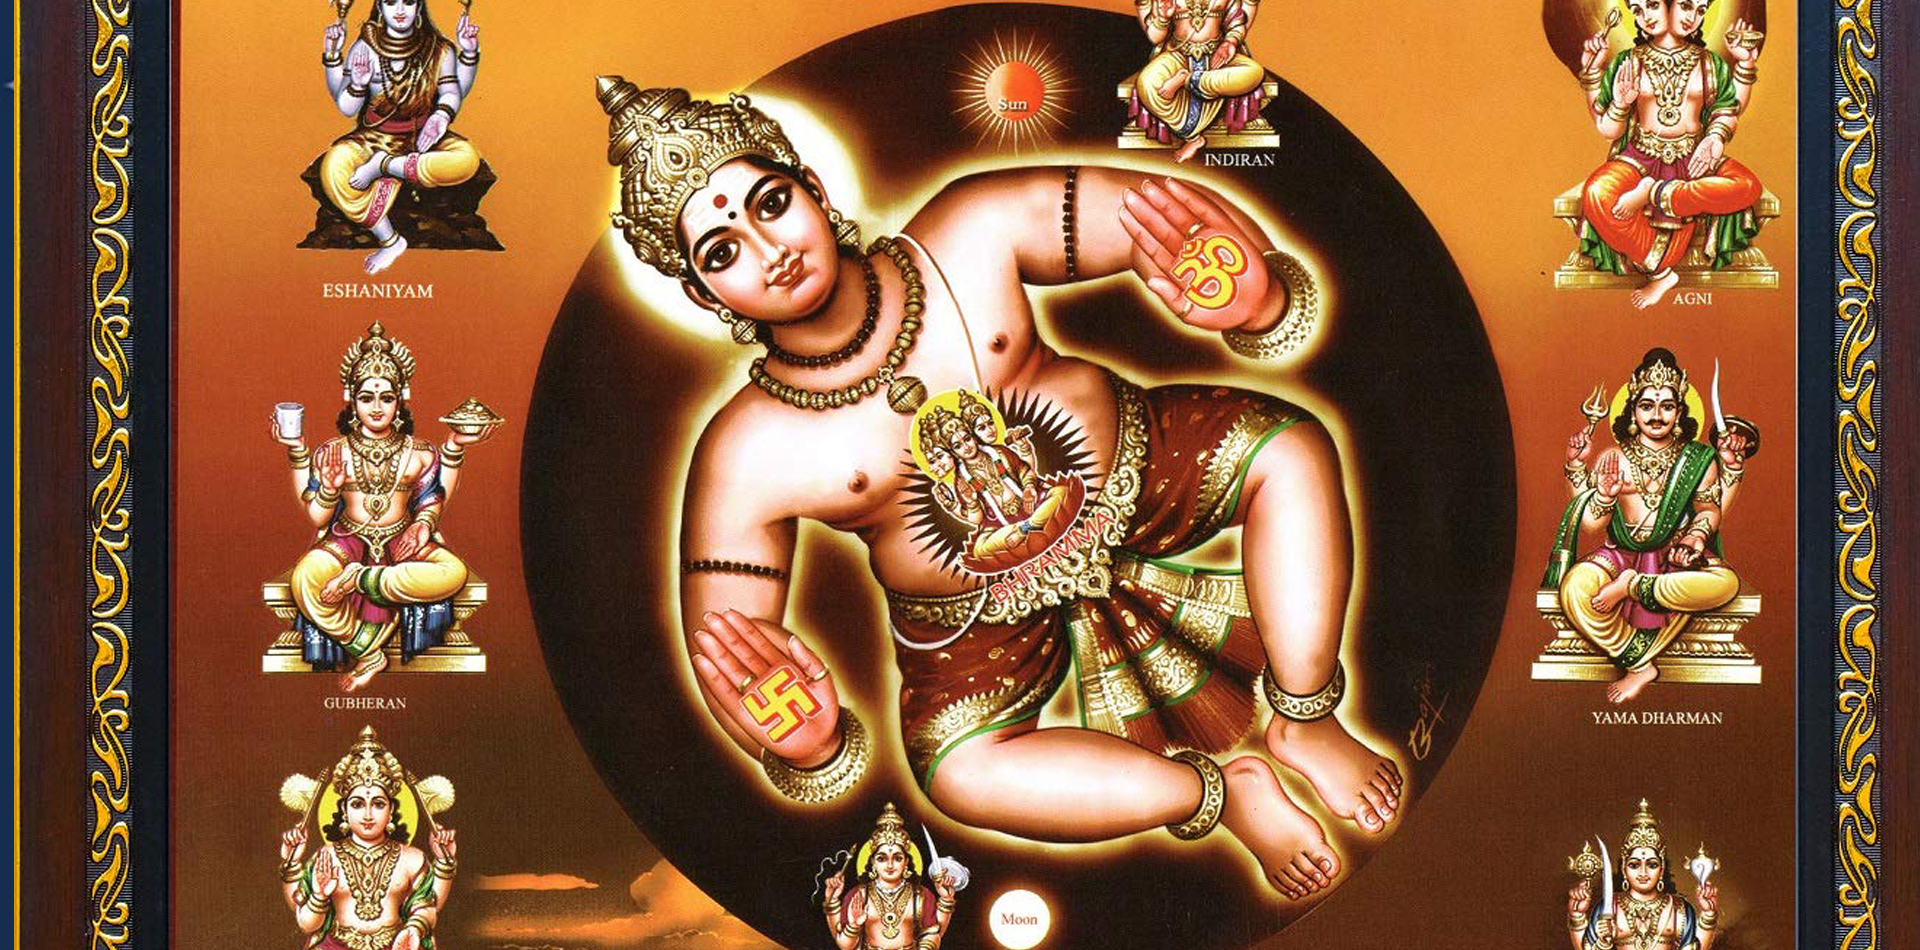 services -Top Astrology in Tamilnadu,Top Astrology in Chennai,Top Astrology in Coimbatore